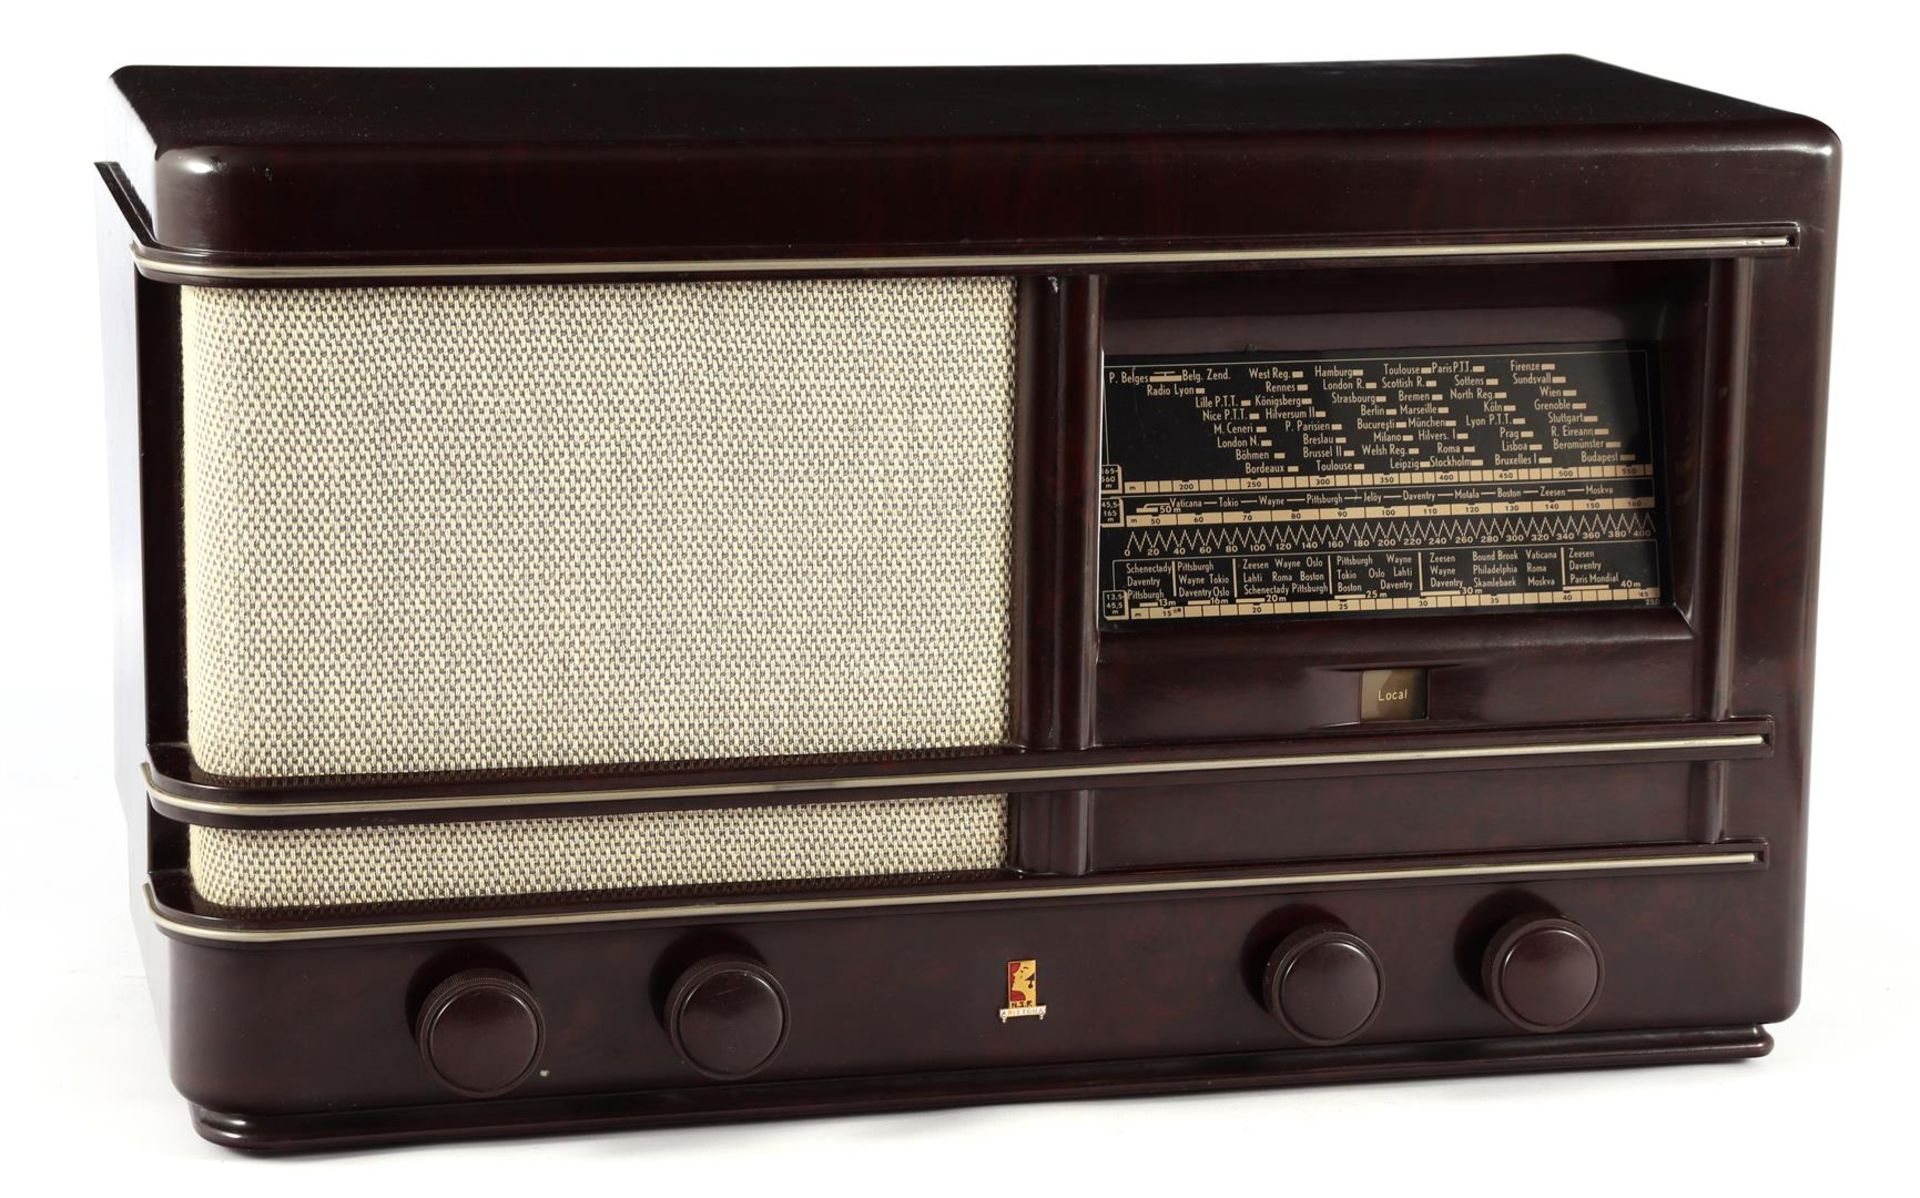 Aristona radio in bakelite cabinet